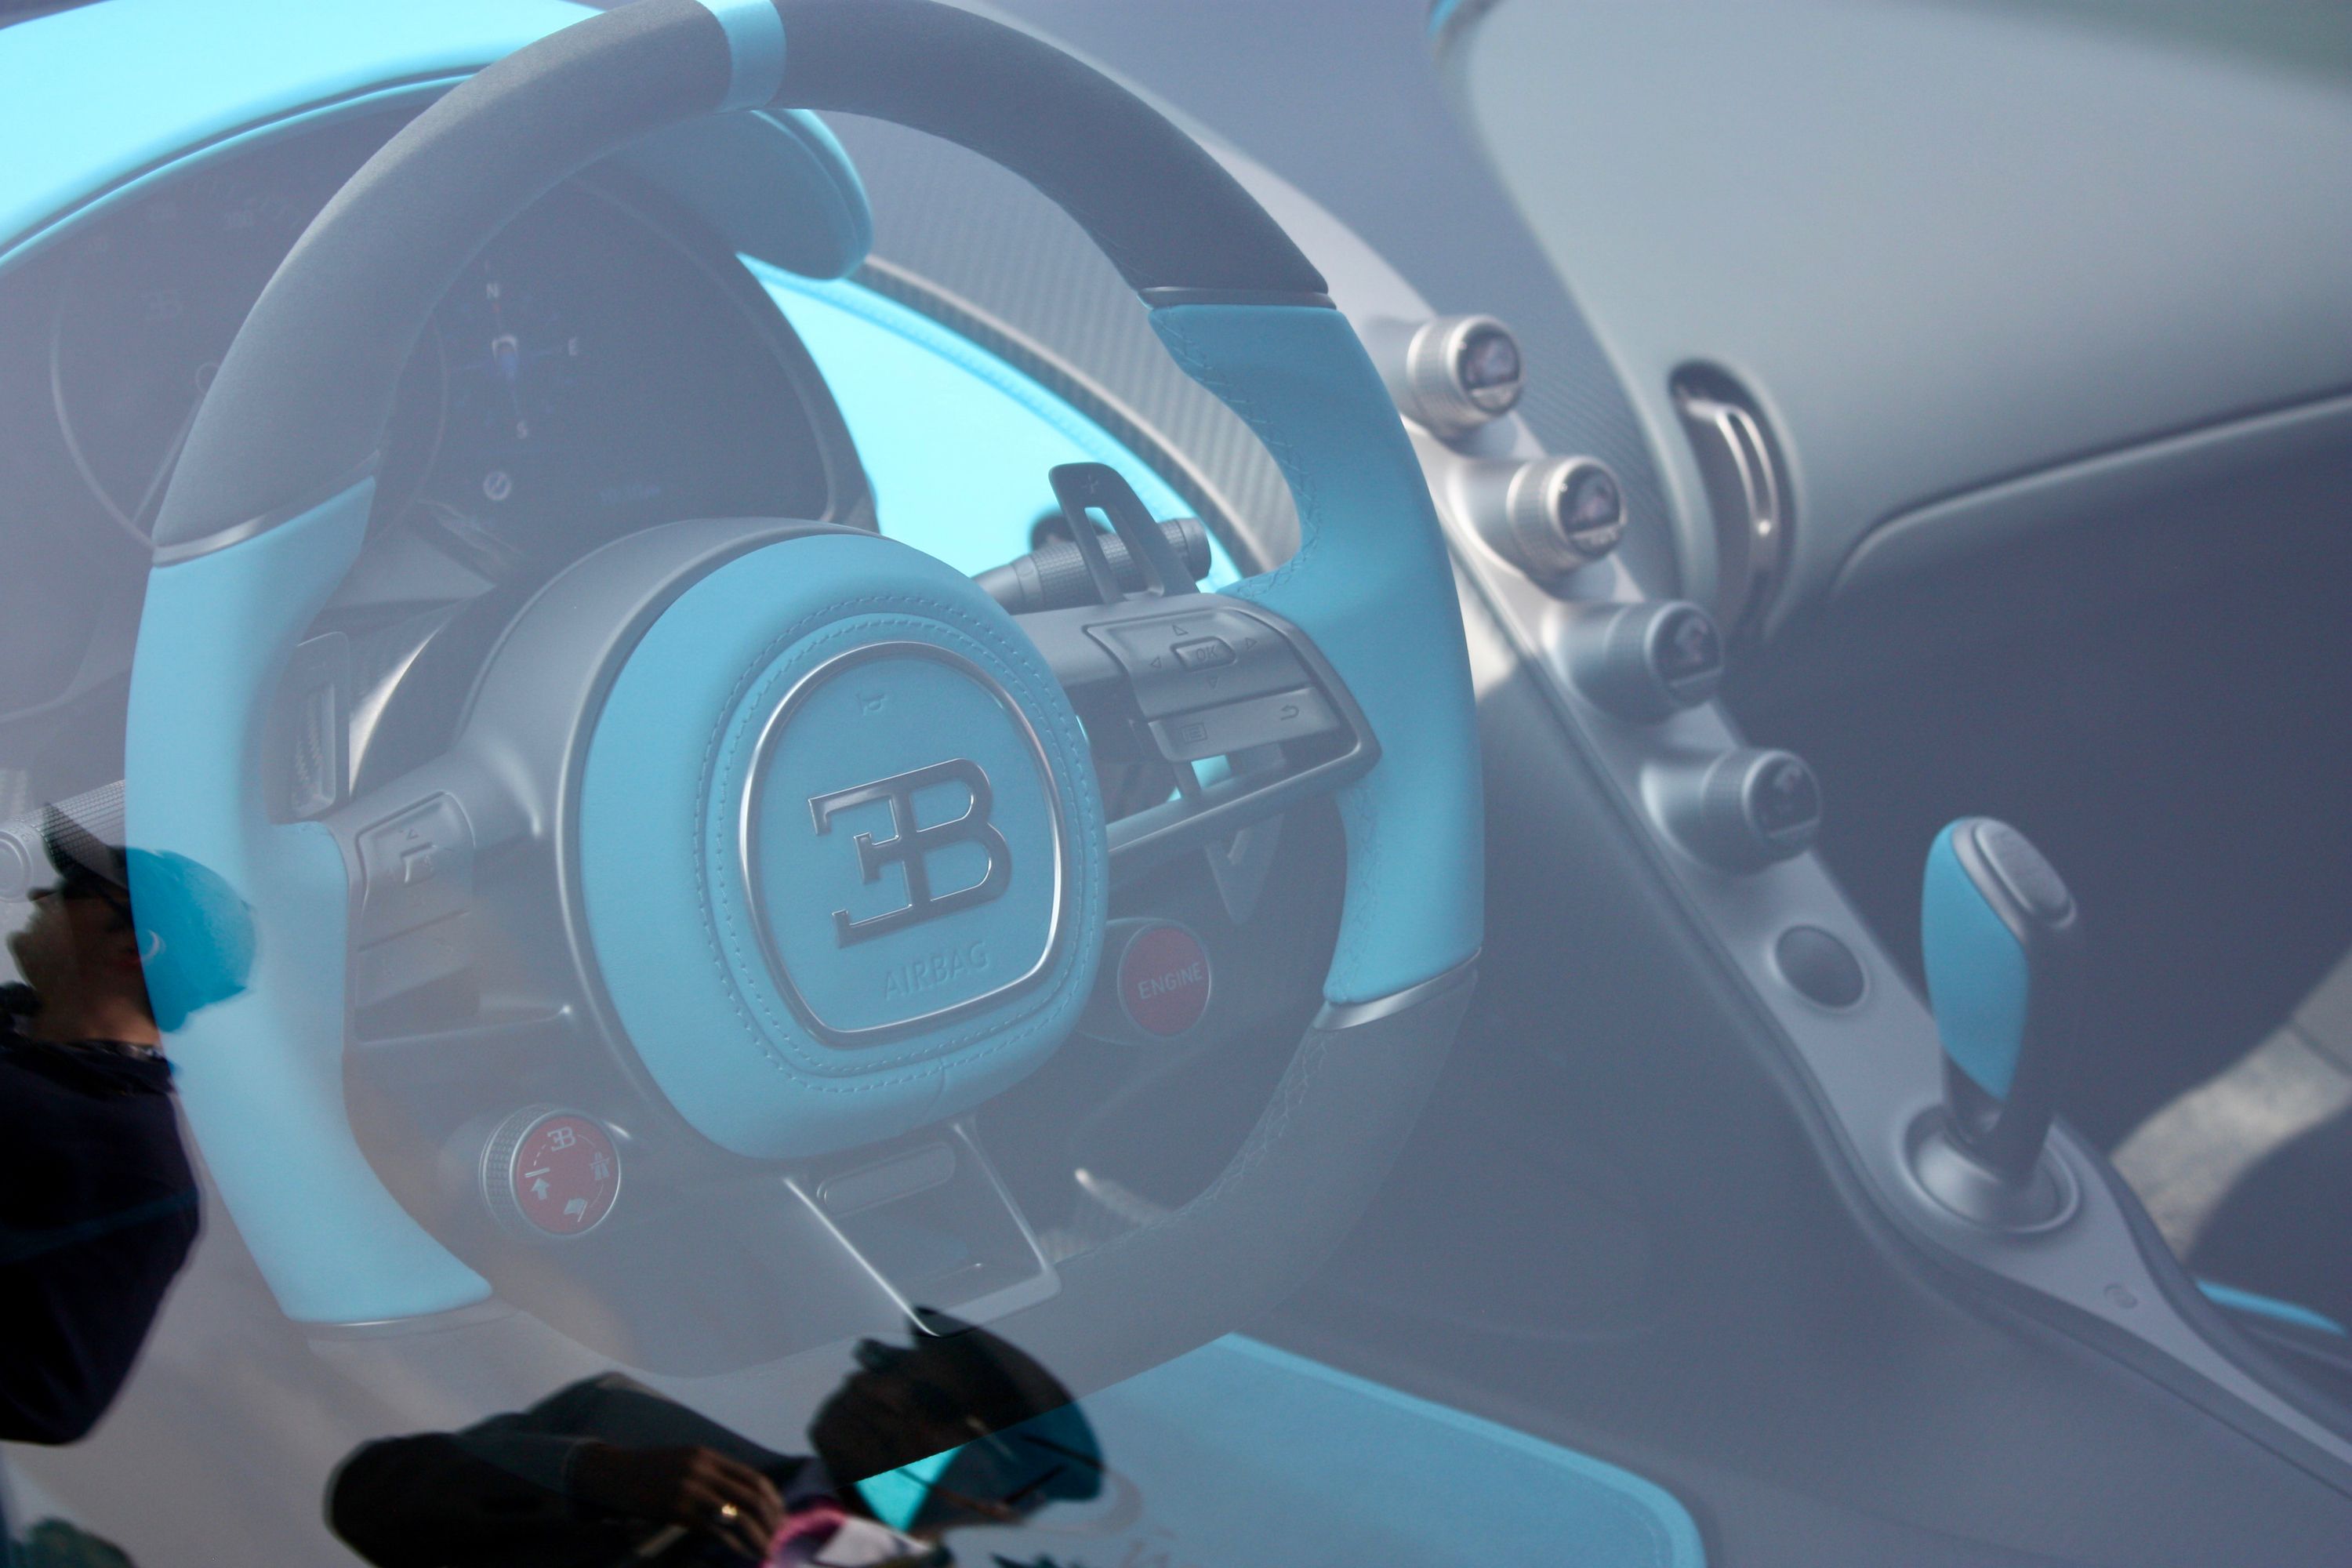 2019 - 2020 Bugatti Could Flip the Super Luxury SUV Market If It Green Lights an SUV